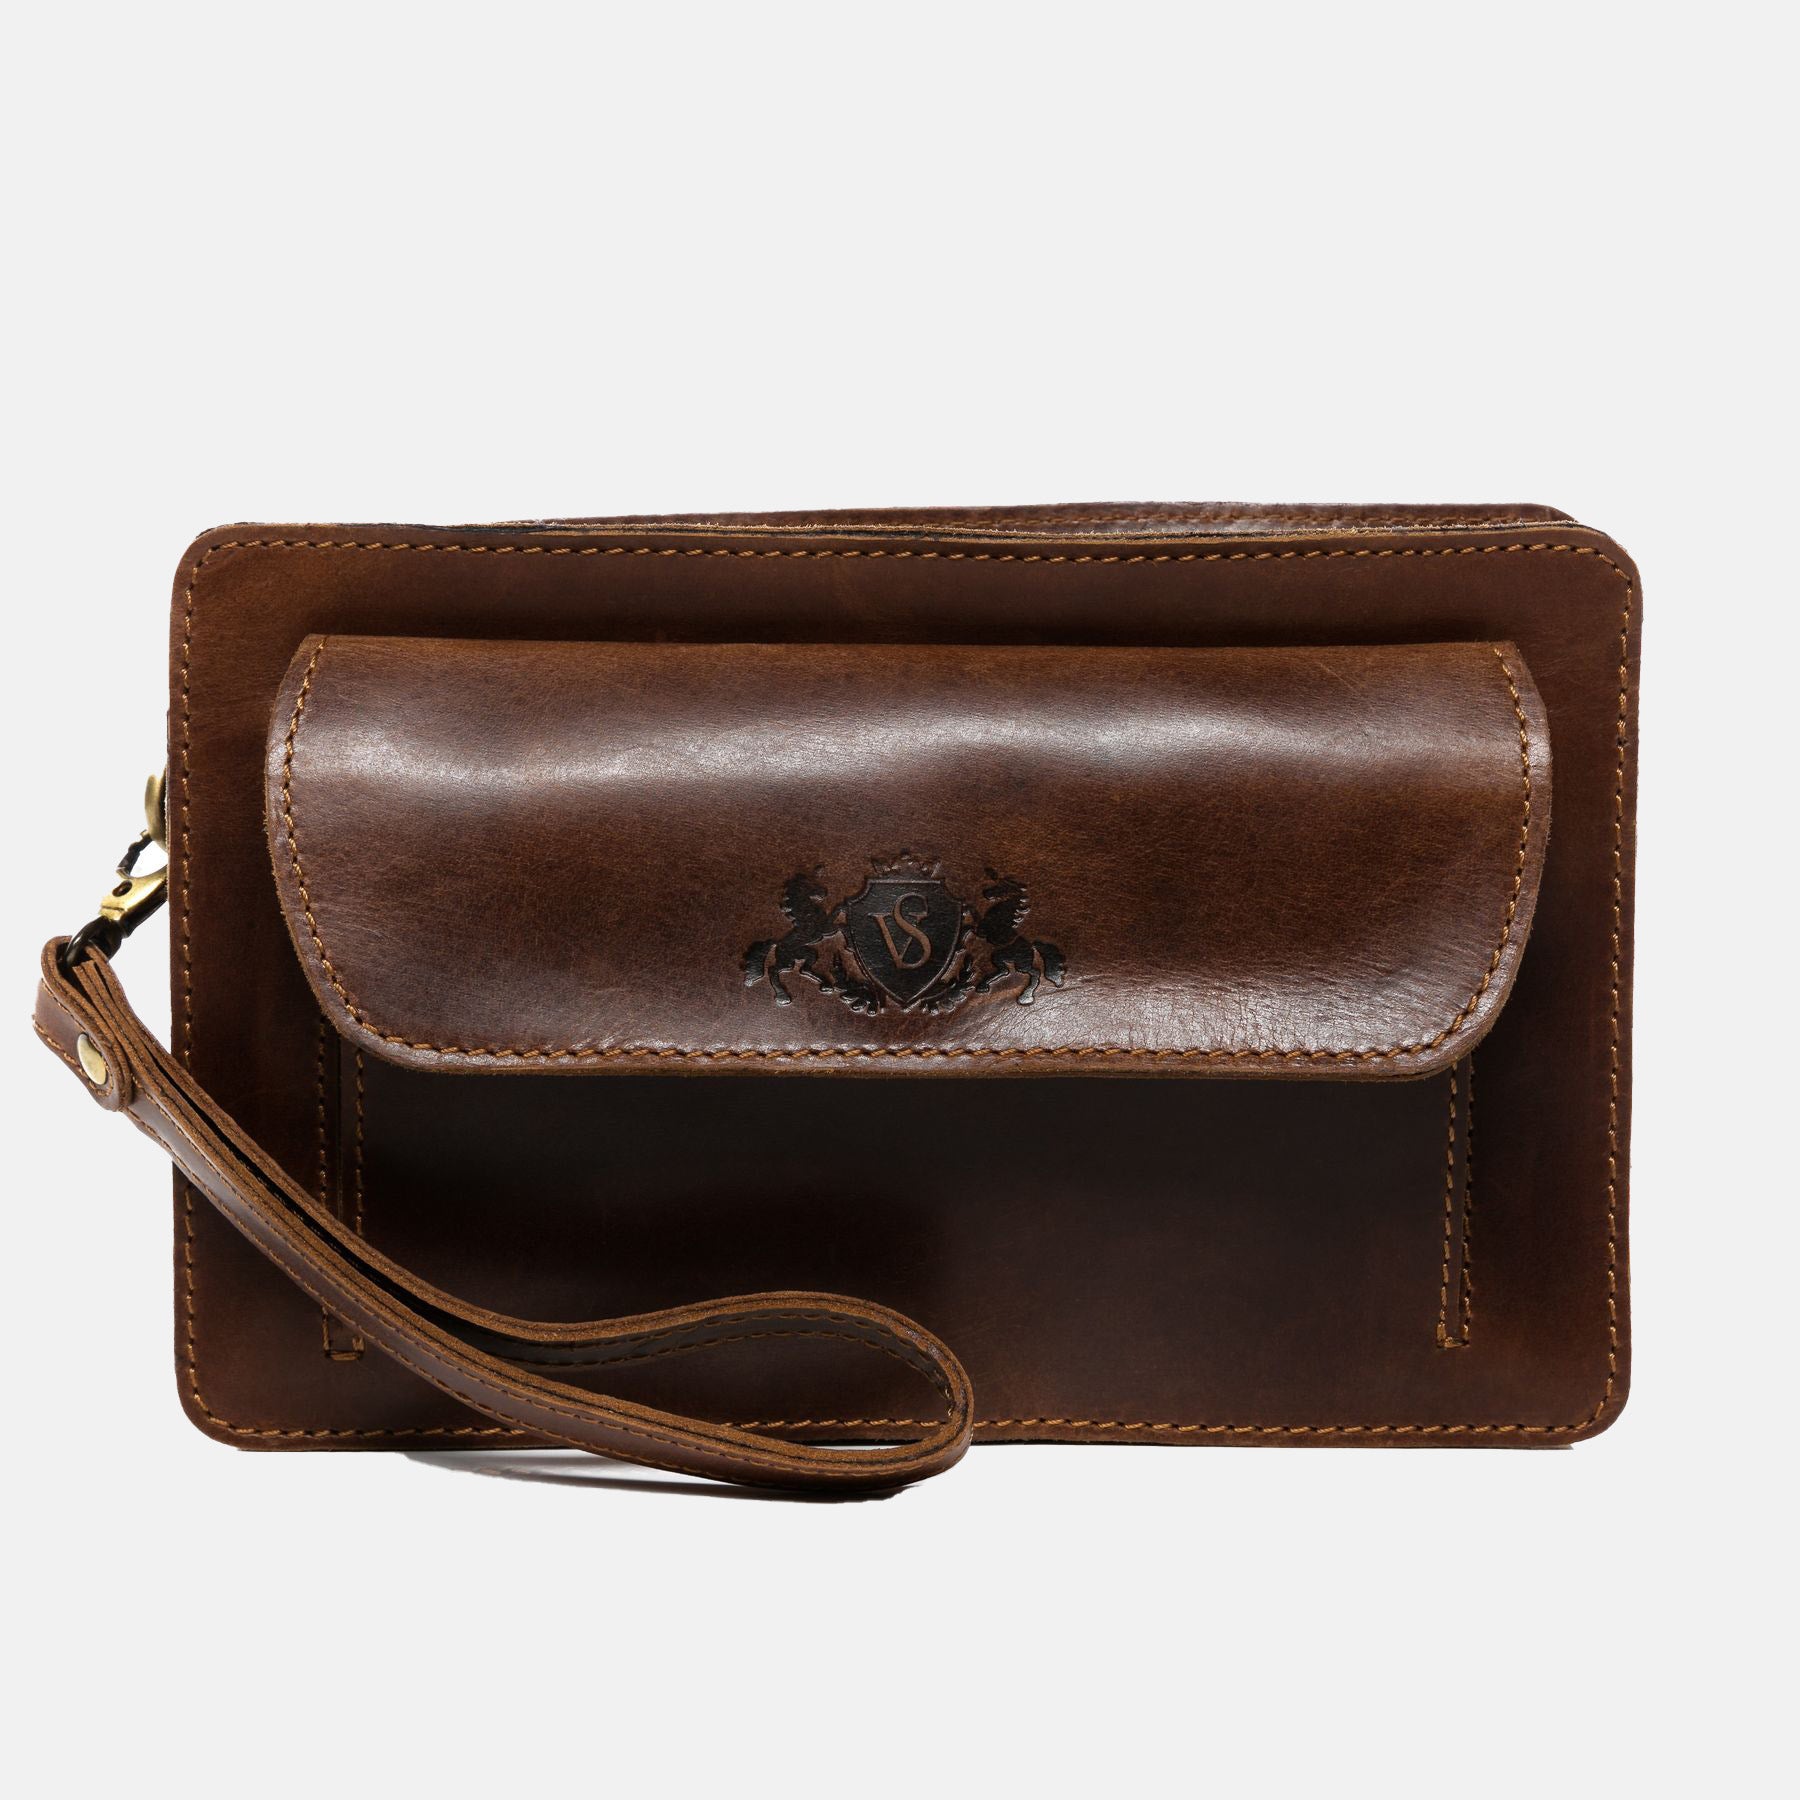 Wrist bag CORNWALL natural leather brown-cognac